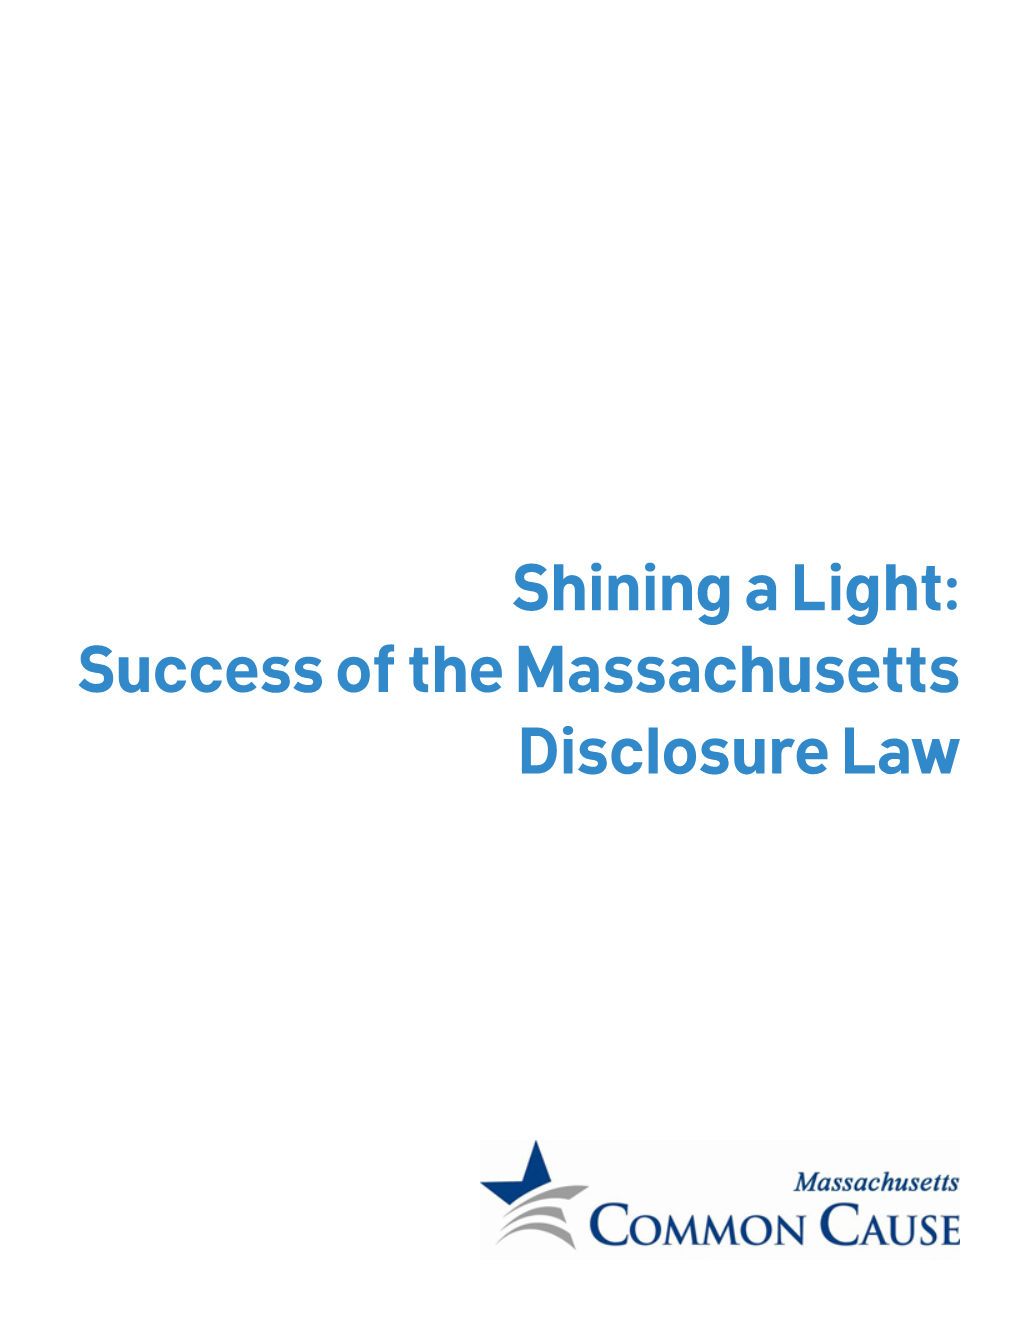 Shining a Light: Success of the Massachusetts Disclosure Law Because of the Massachusetts Disclosure Law